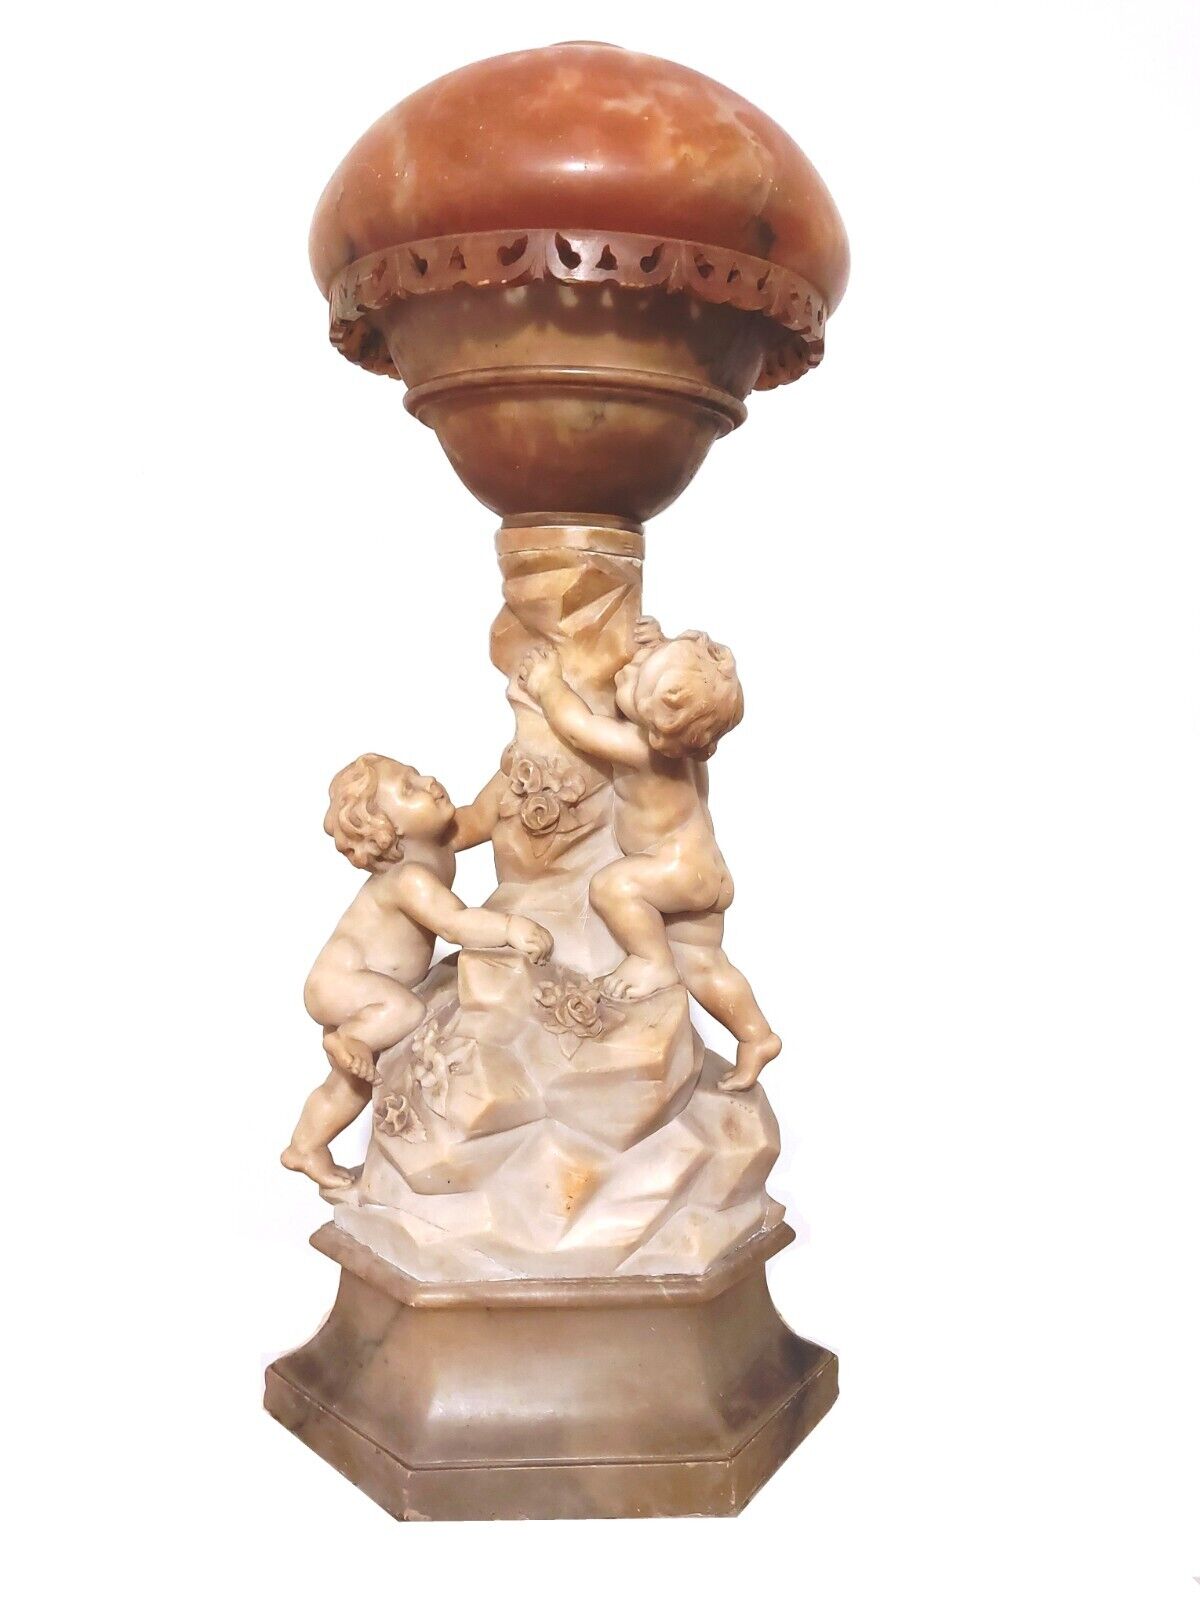 ANTIQUE MONUMENTAL ITALIAN ALABASTER FIGURAL LAMP SCULPTURE CHILD CHERUB BY CONT